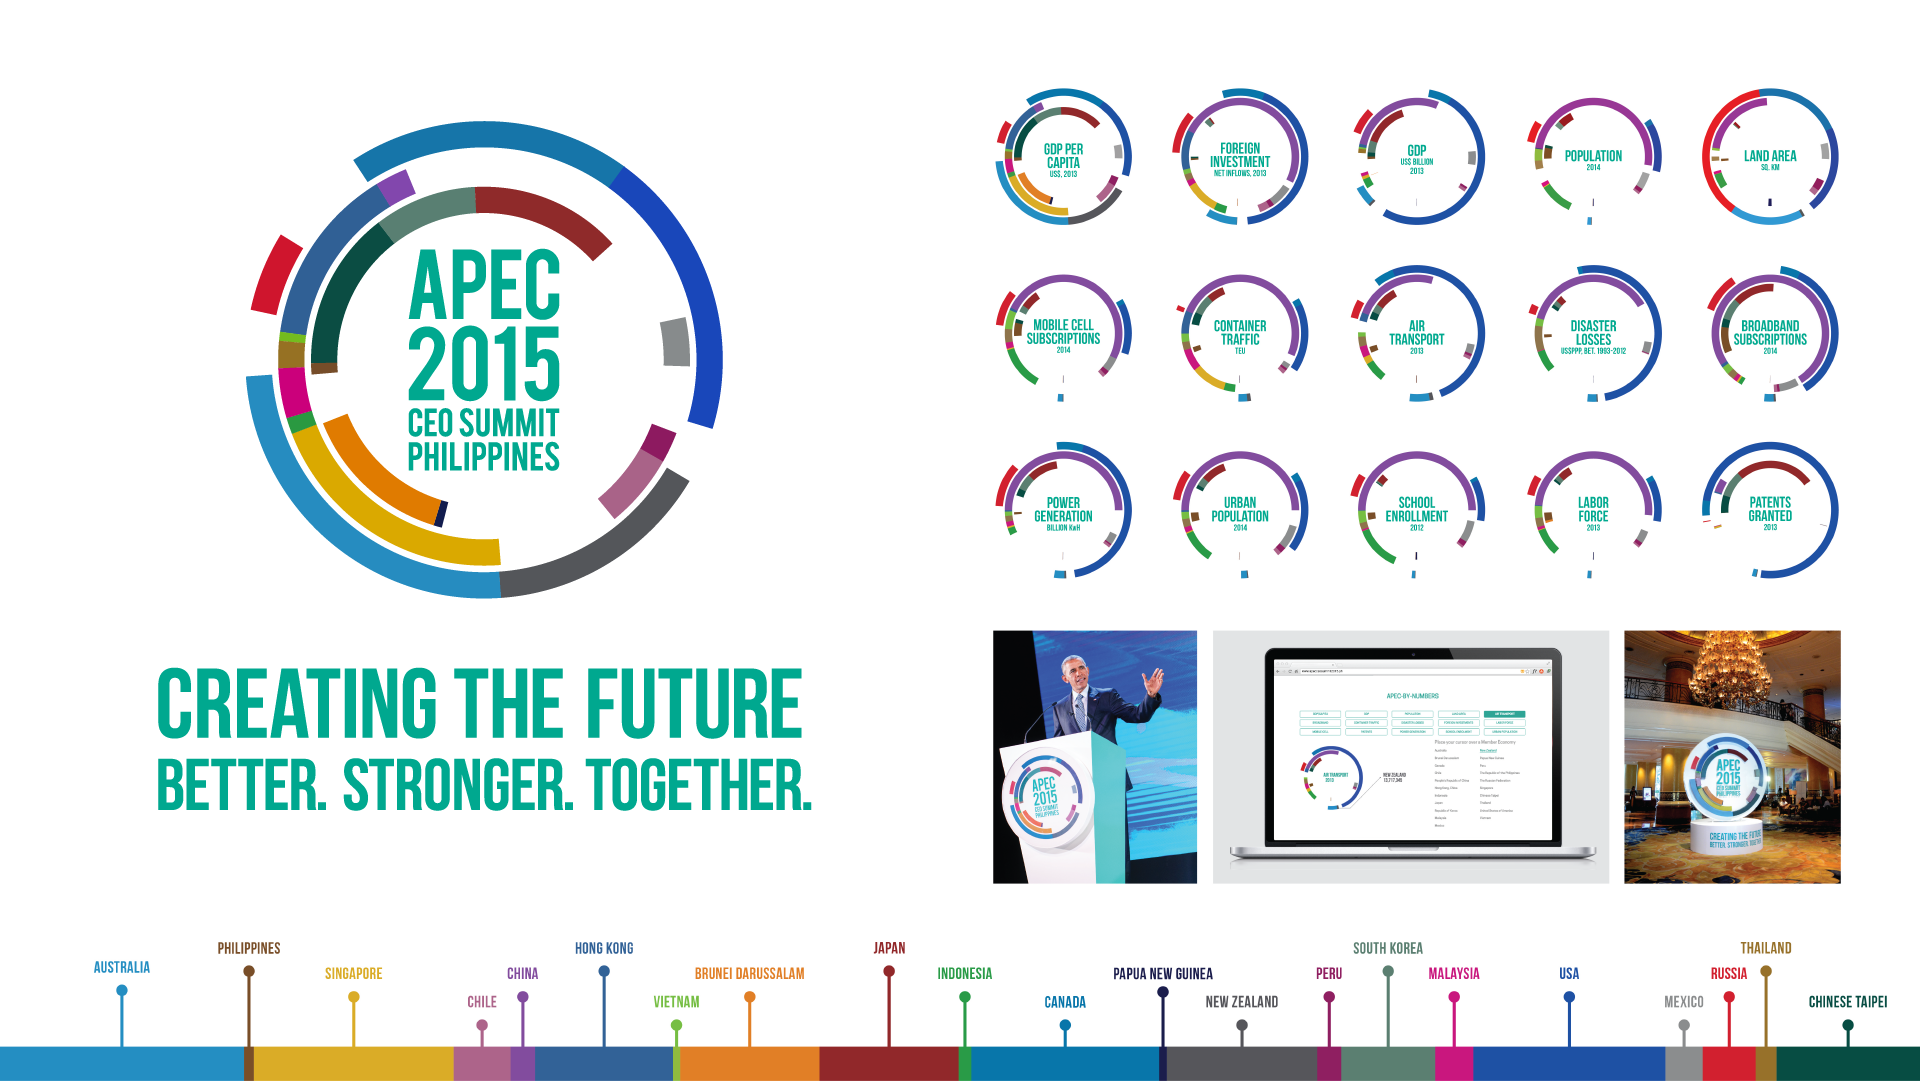 APEC CEO Summit